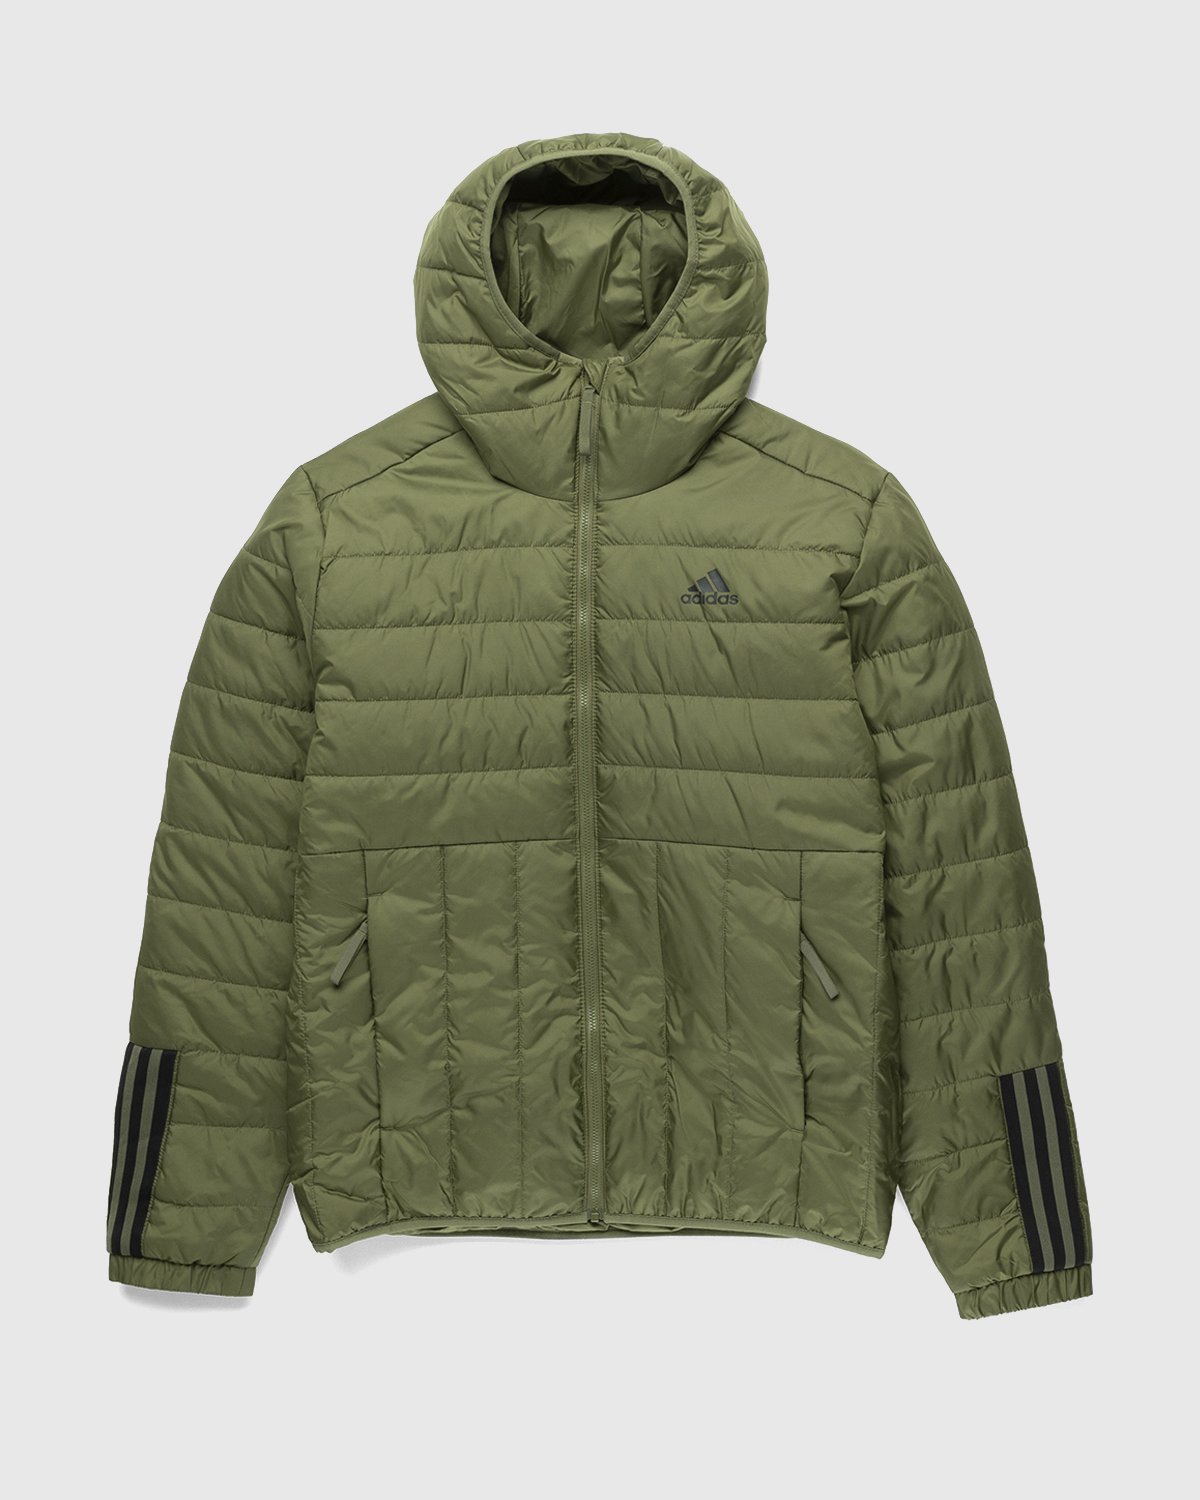 Adidas - Itavic 3-Stripes Midweight Hooded Jacket Olive - Clothing - Green - Image 1